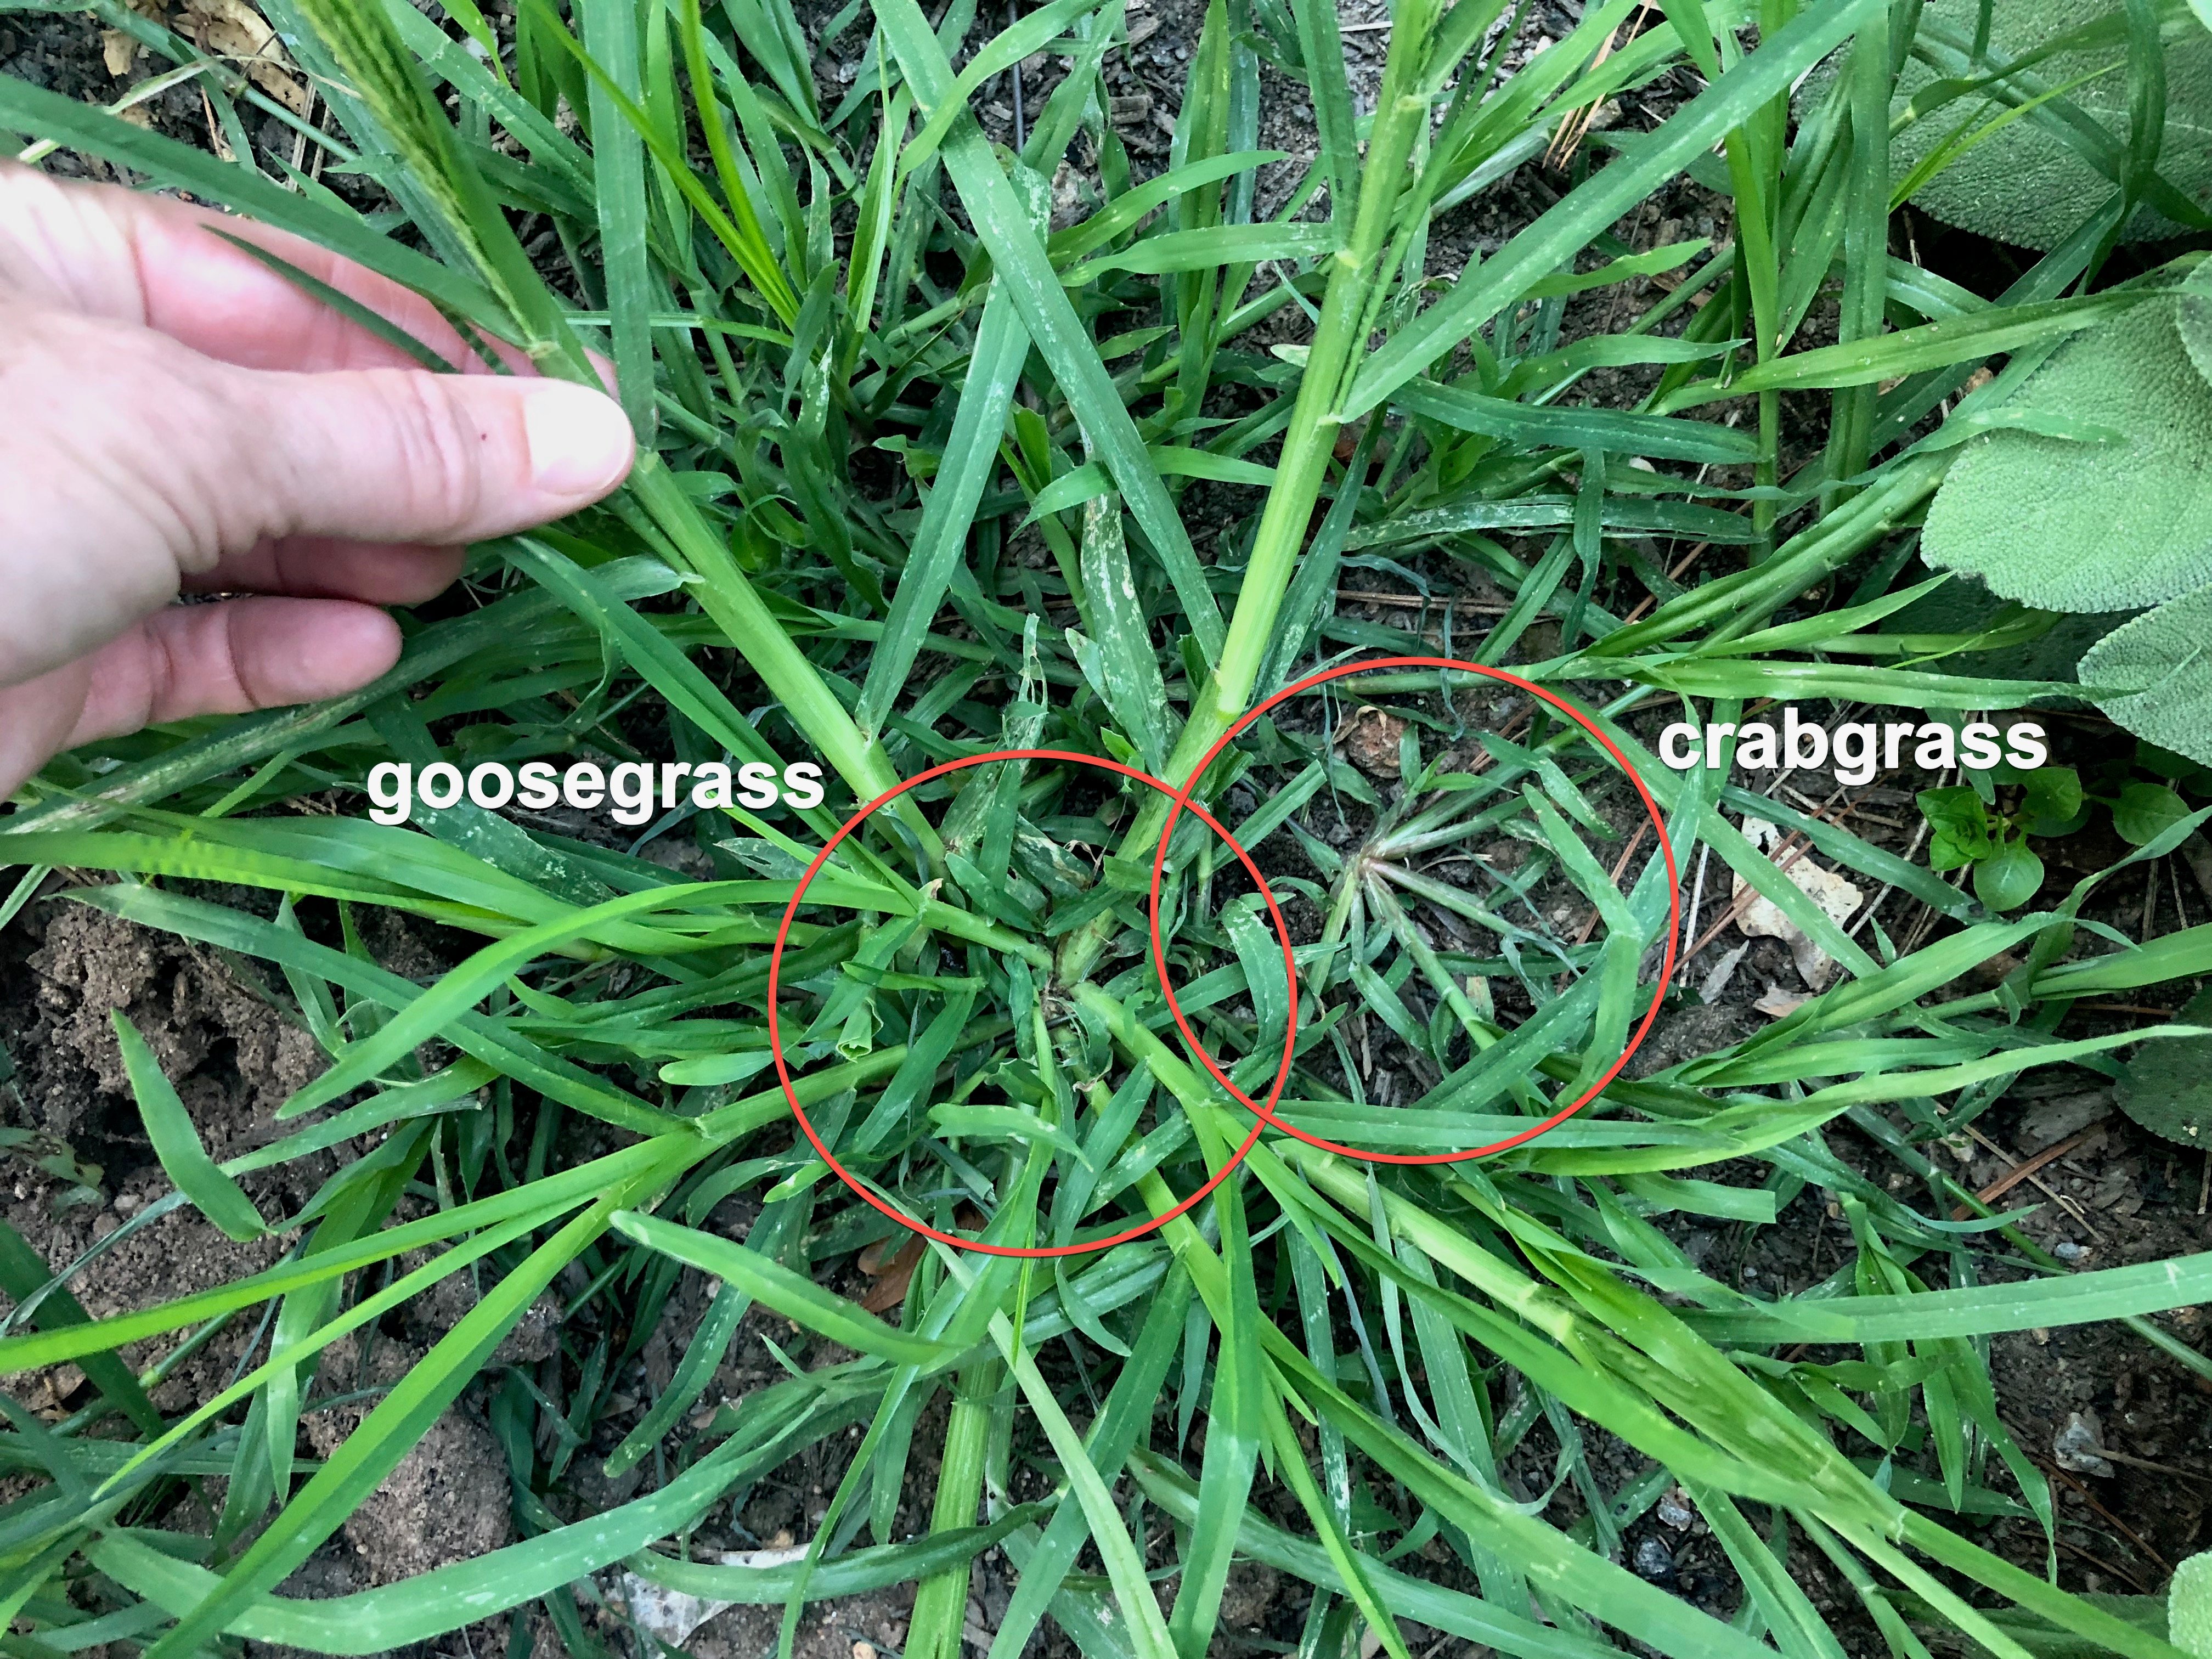 goosgrass and crabgrass coparison-1